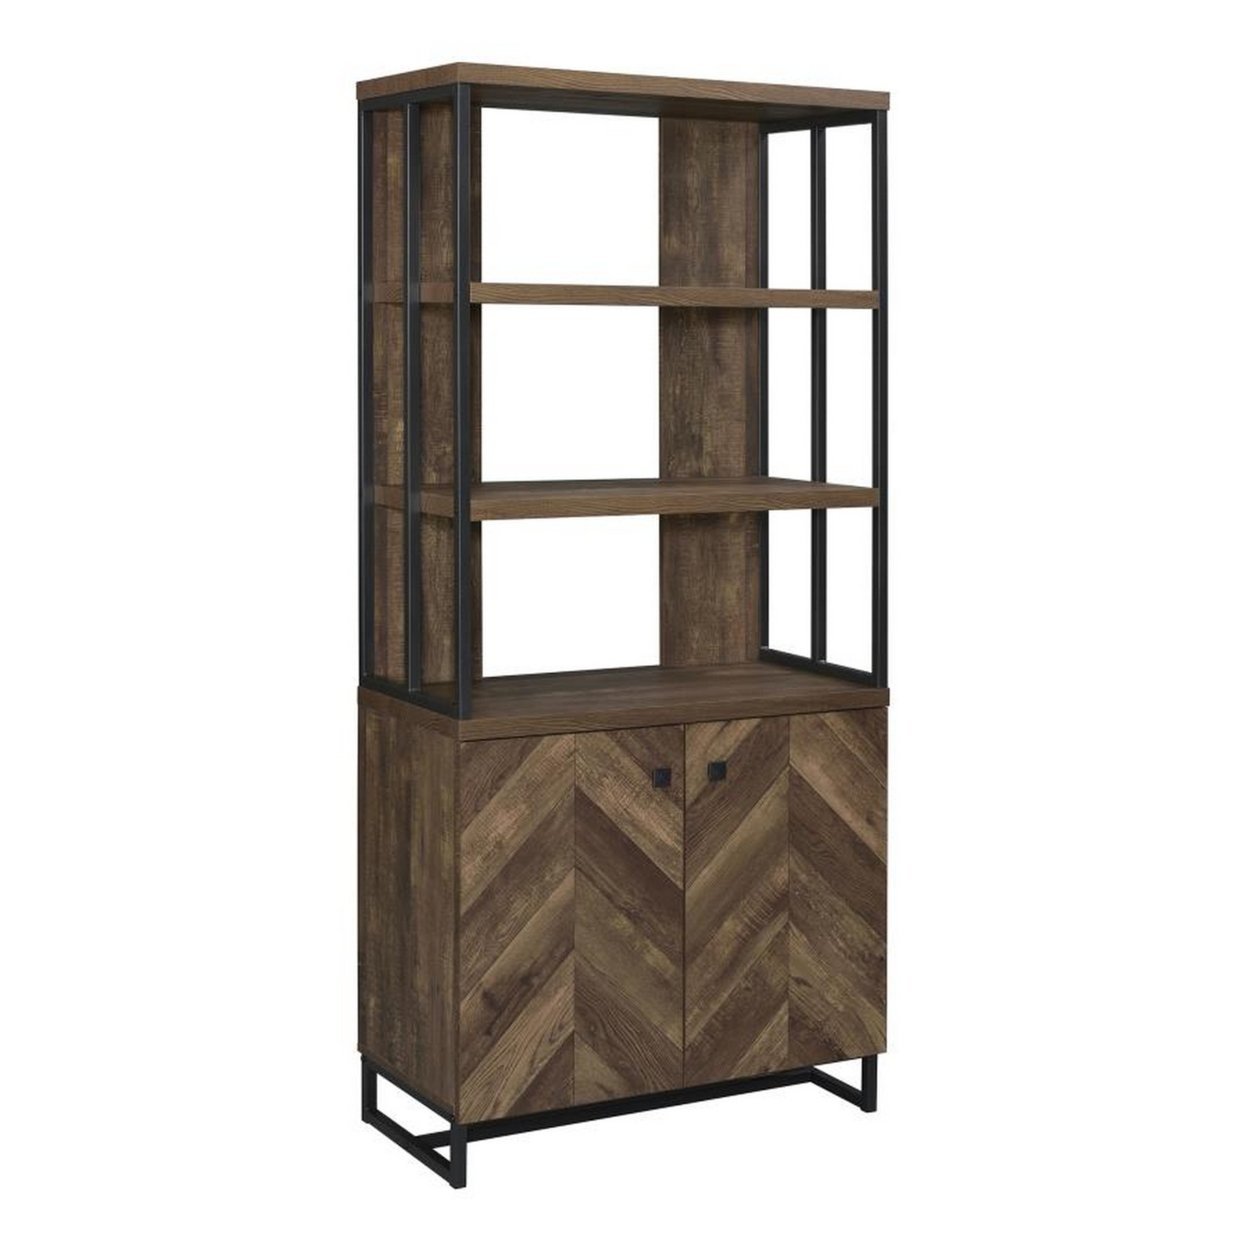 Wooden Bookcase With 3 Tier Shelves And 2 Doors, Brown- Saltoro Sherpi